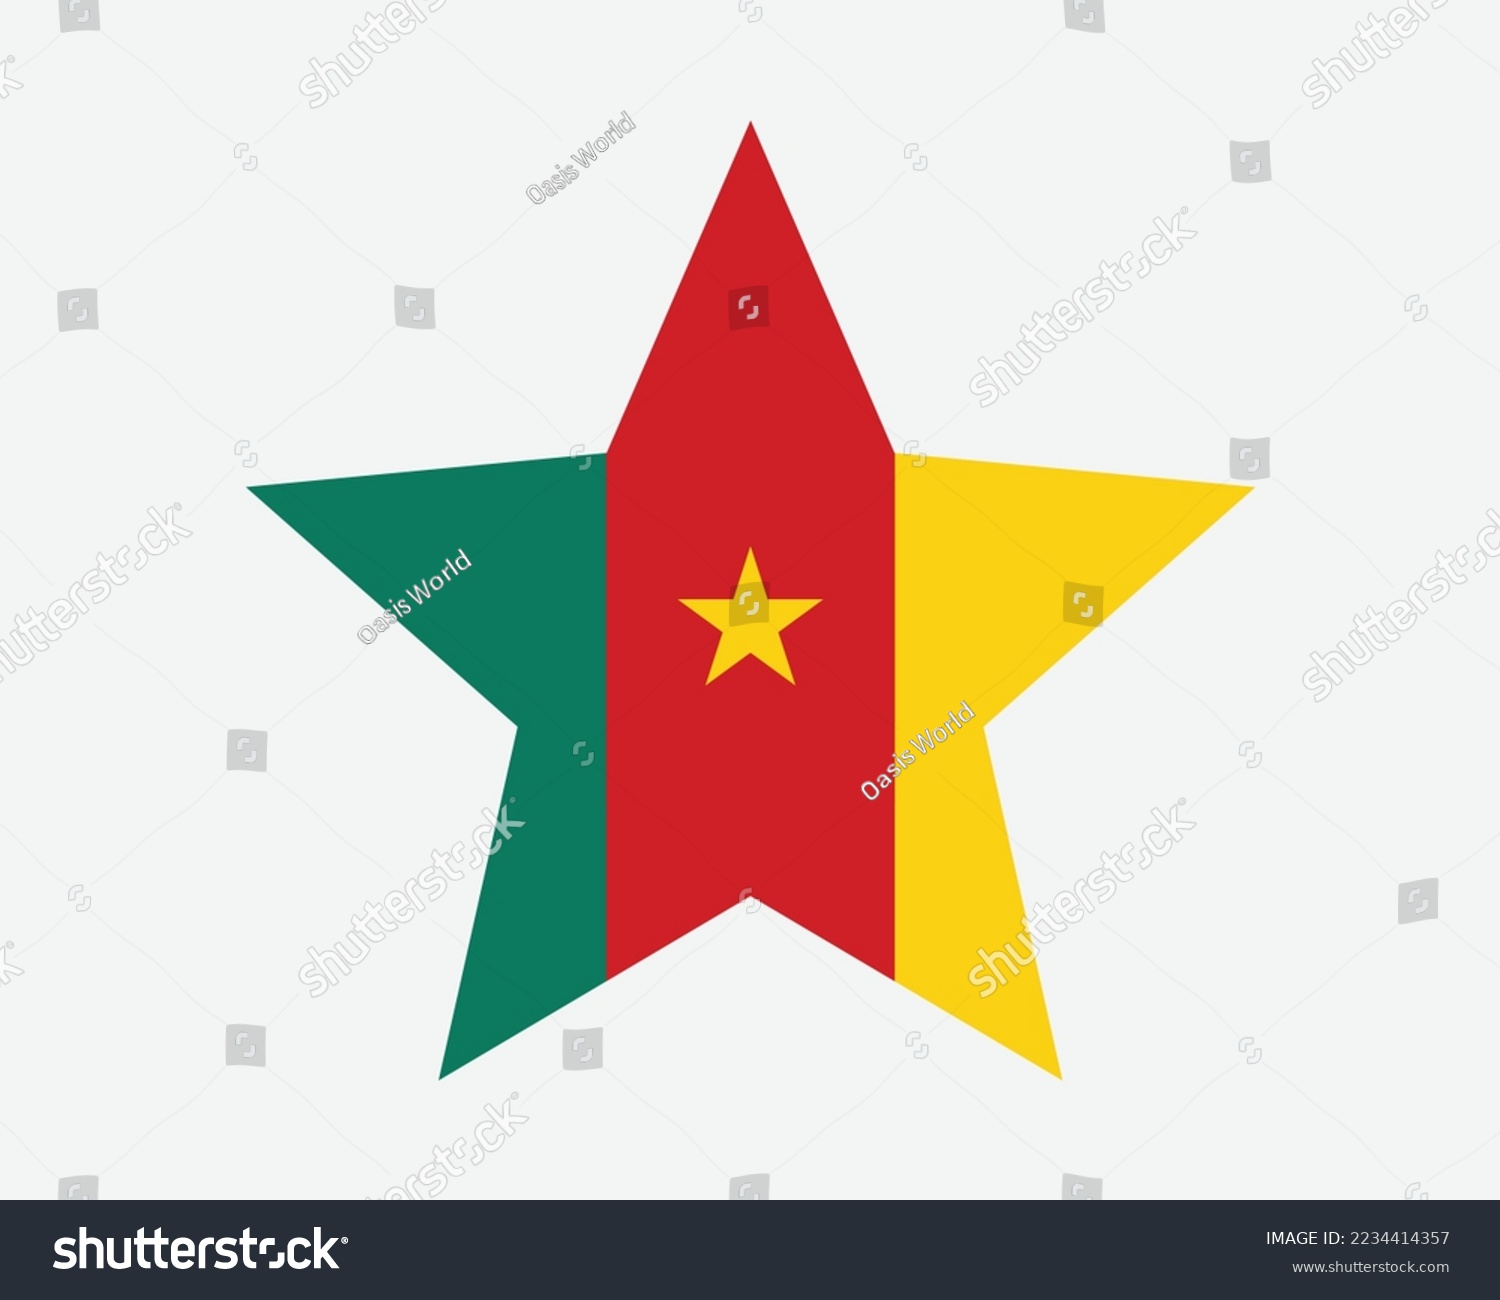 SVG of Cameroon Star Flag. Cameroonian Star Shape Flag. Country National Banner Icon Symbol Vector 2D Flat Artwork Graphic Illustration svg